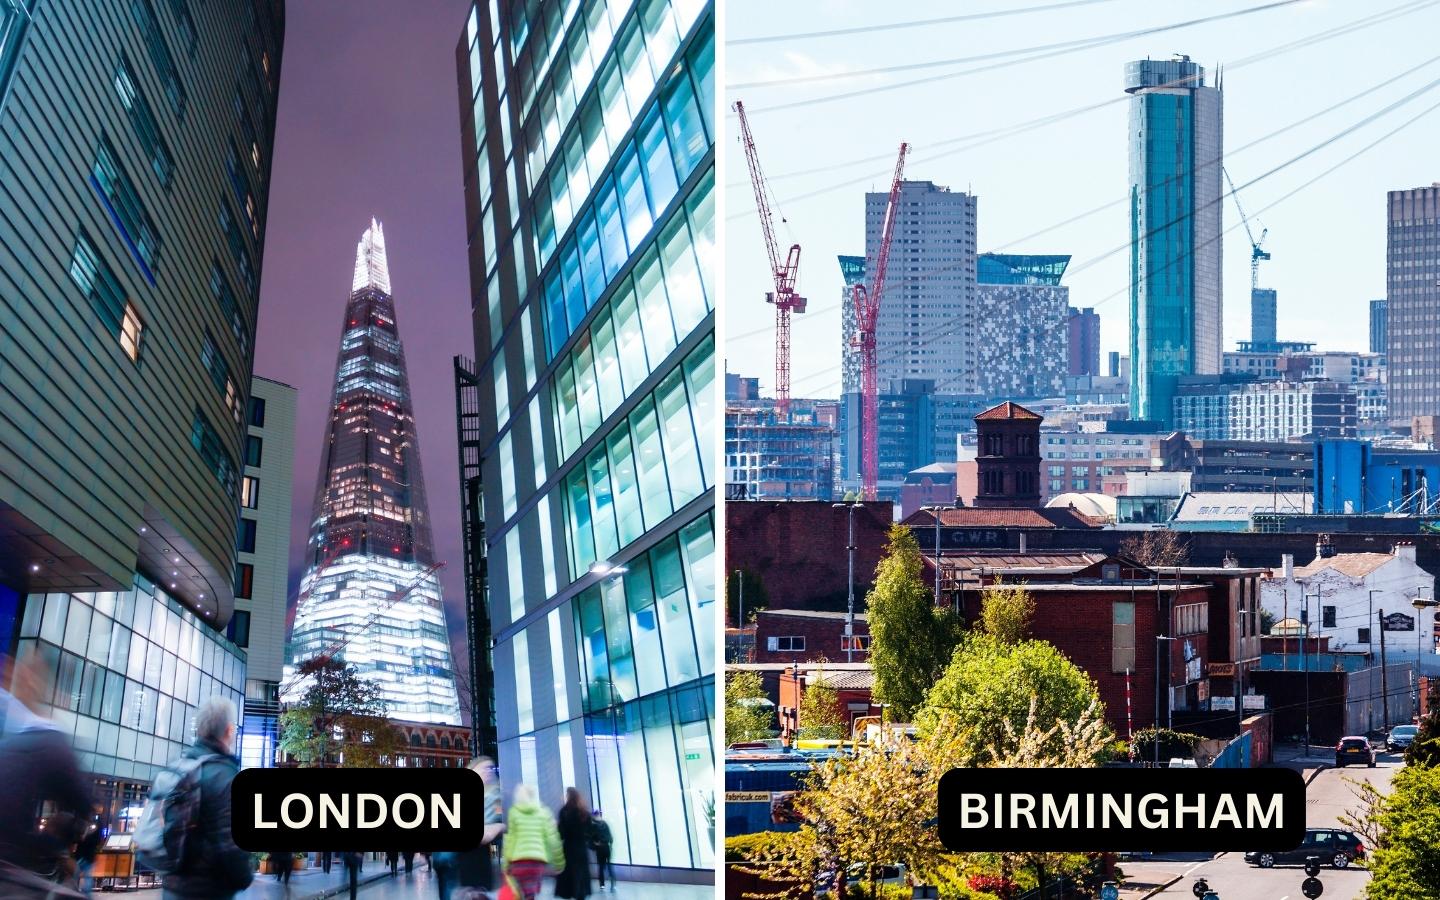 Job Opportunities In London Vs Birmingham